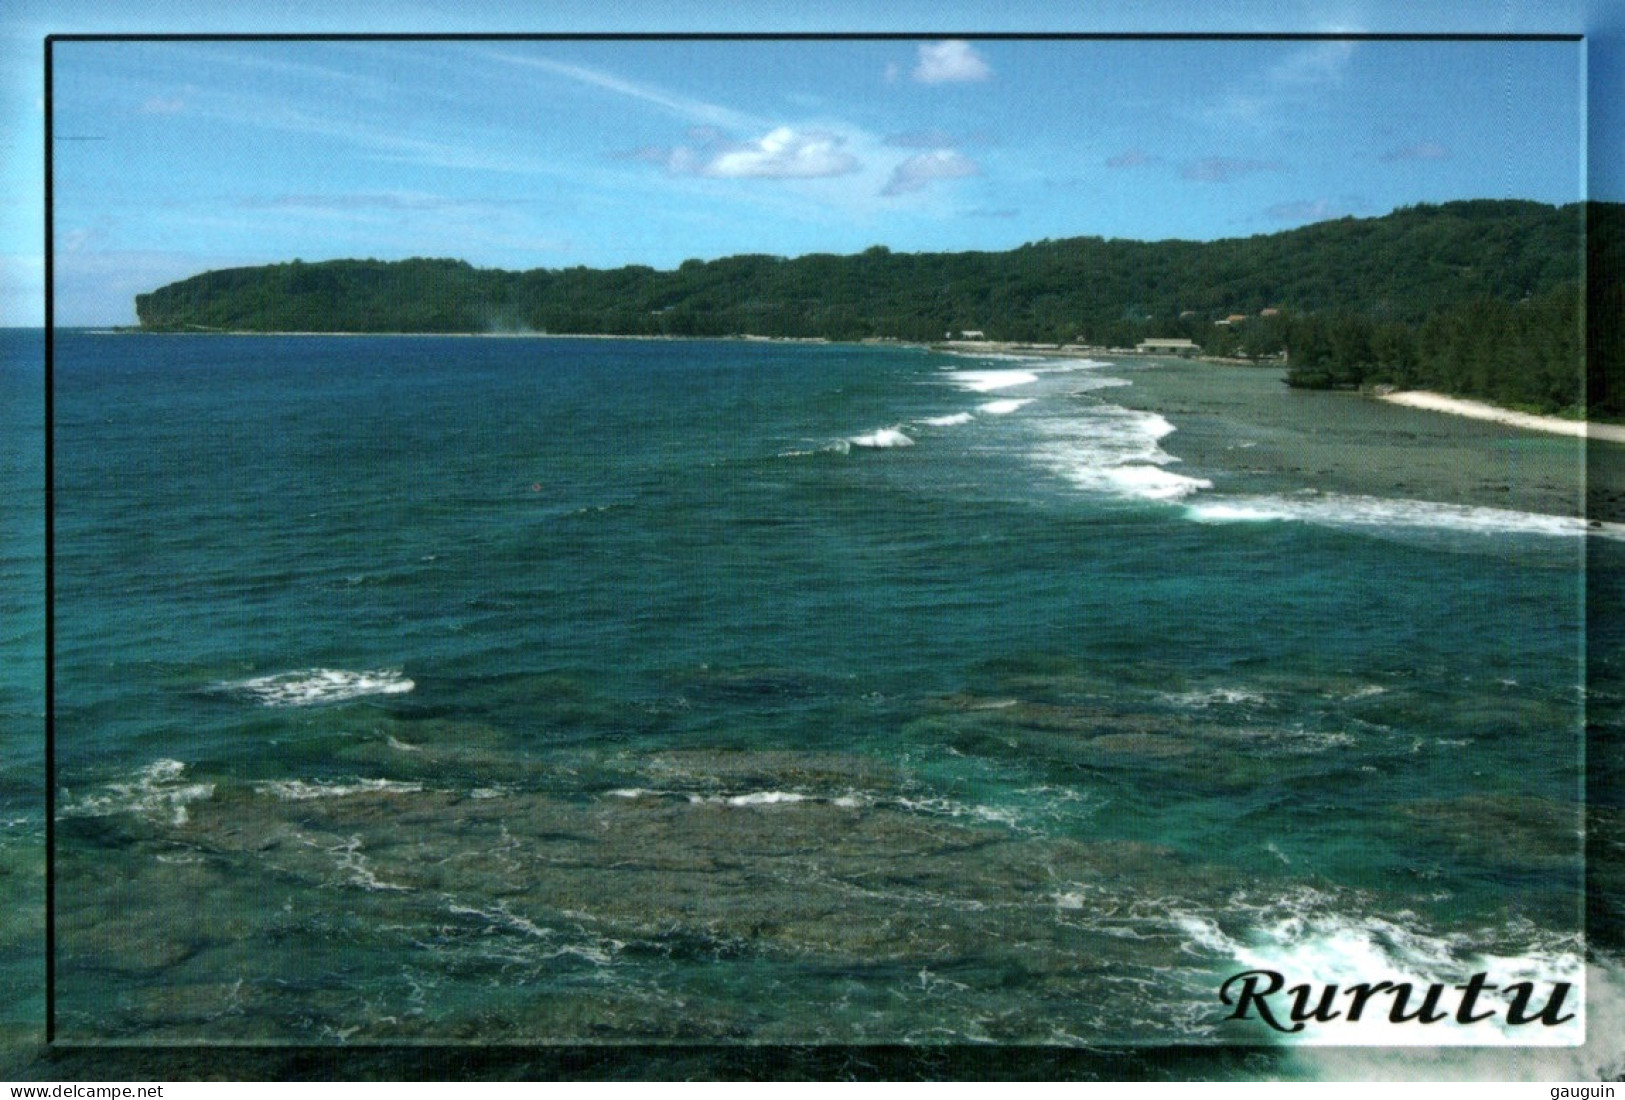 CPM - RURUTU - Baie De MOERAI - Photo RC.Wymann - Edition STP Multipress - Polynésie Française